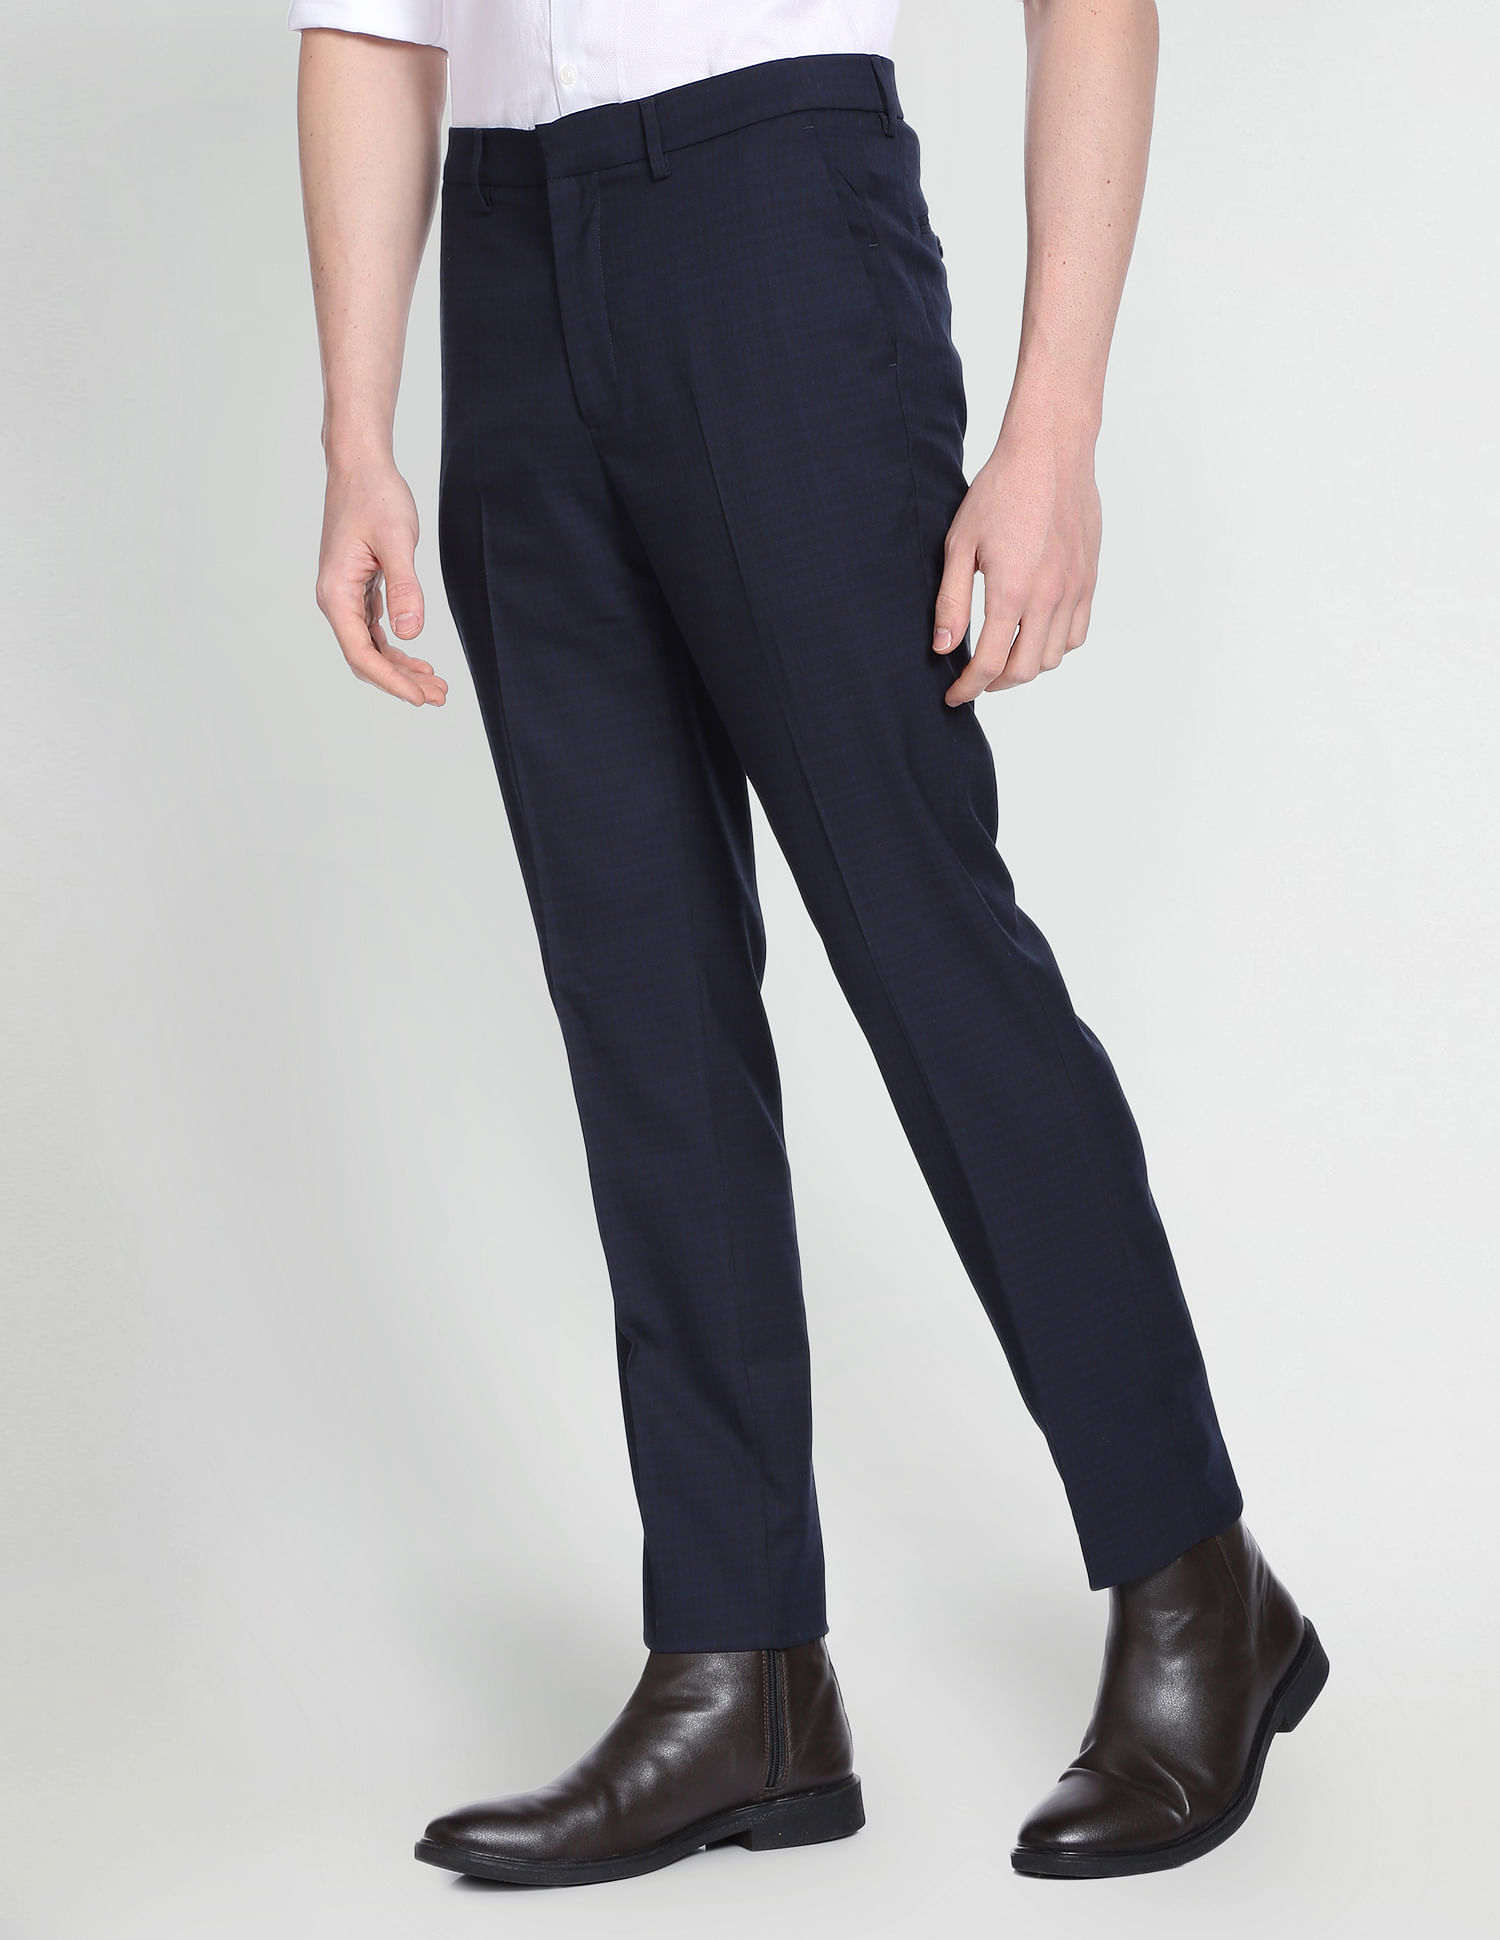 MANCREW Slim Fit Formal trousers For Men  Navy Blue